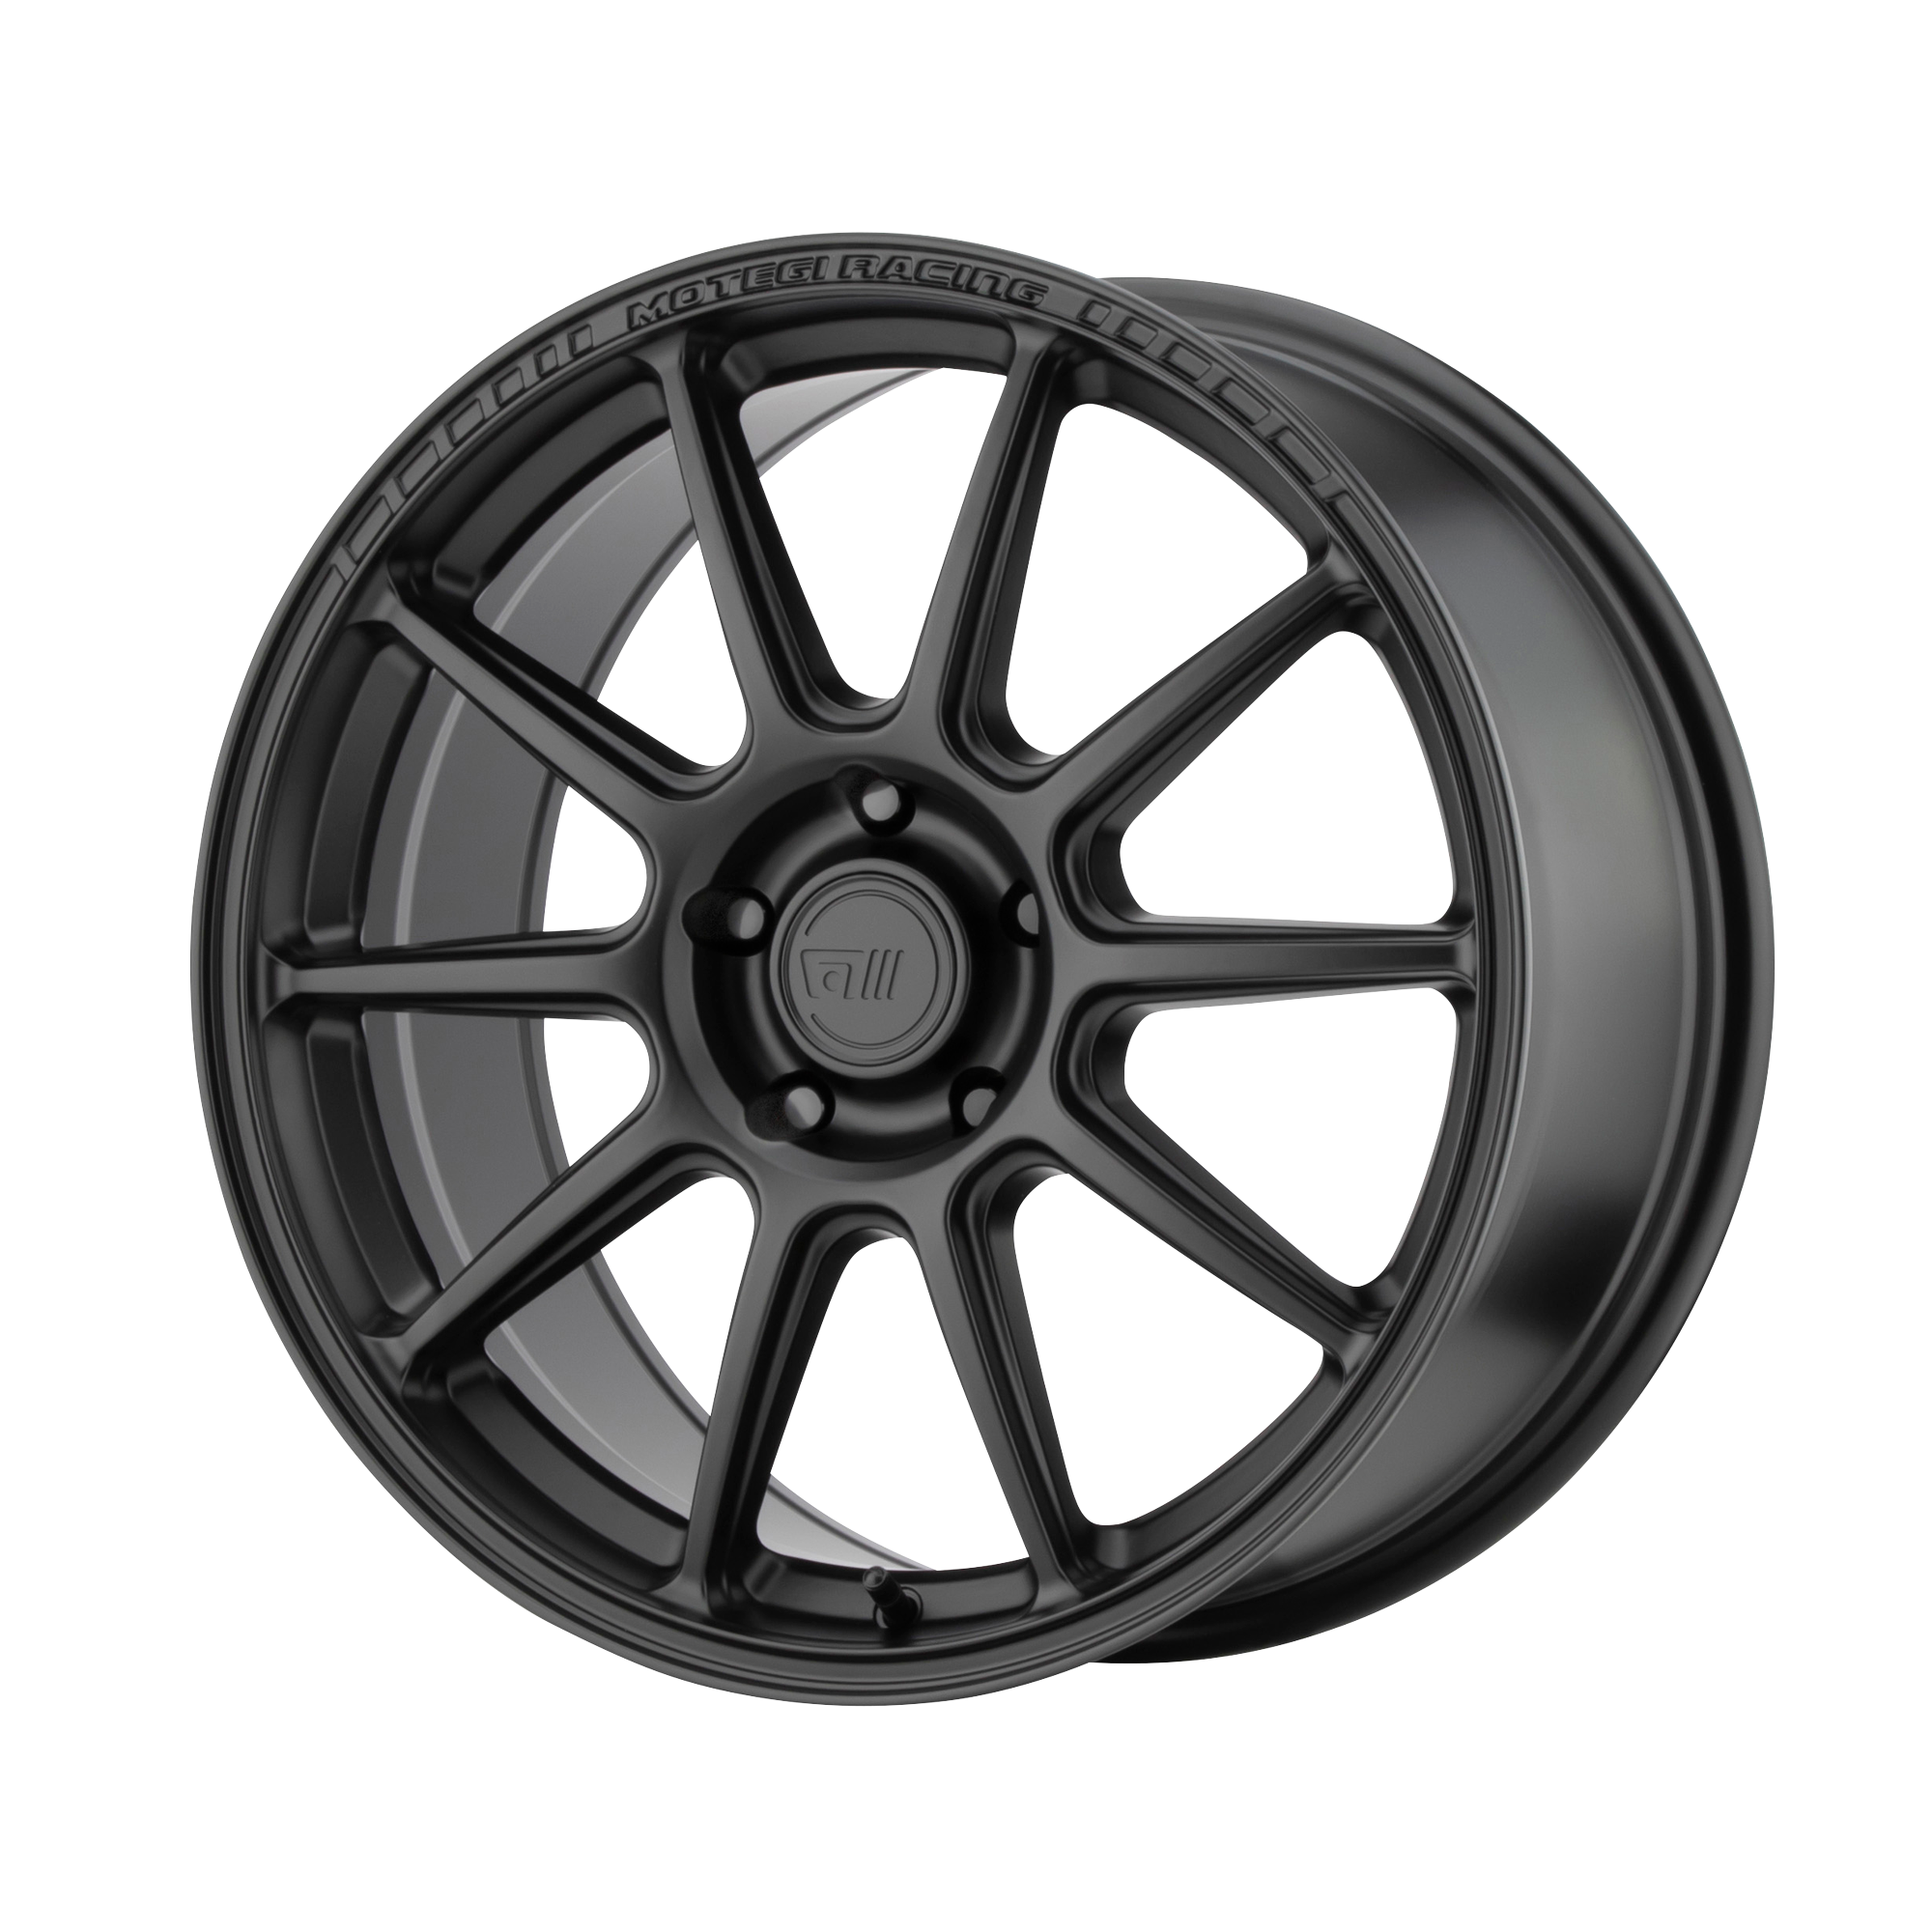 MR140 18x8.5 5x114.30 SATIN BLACK (45 mm) - Tires and Engine Performance